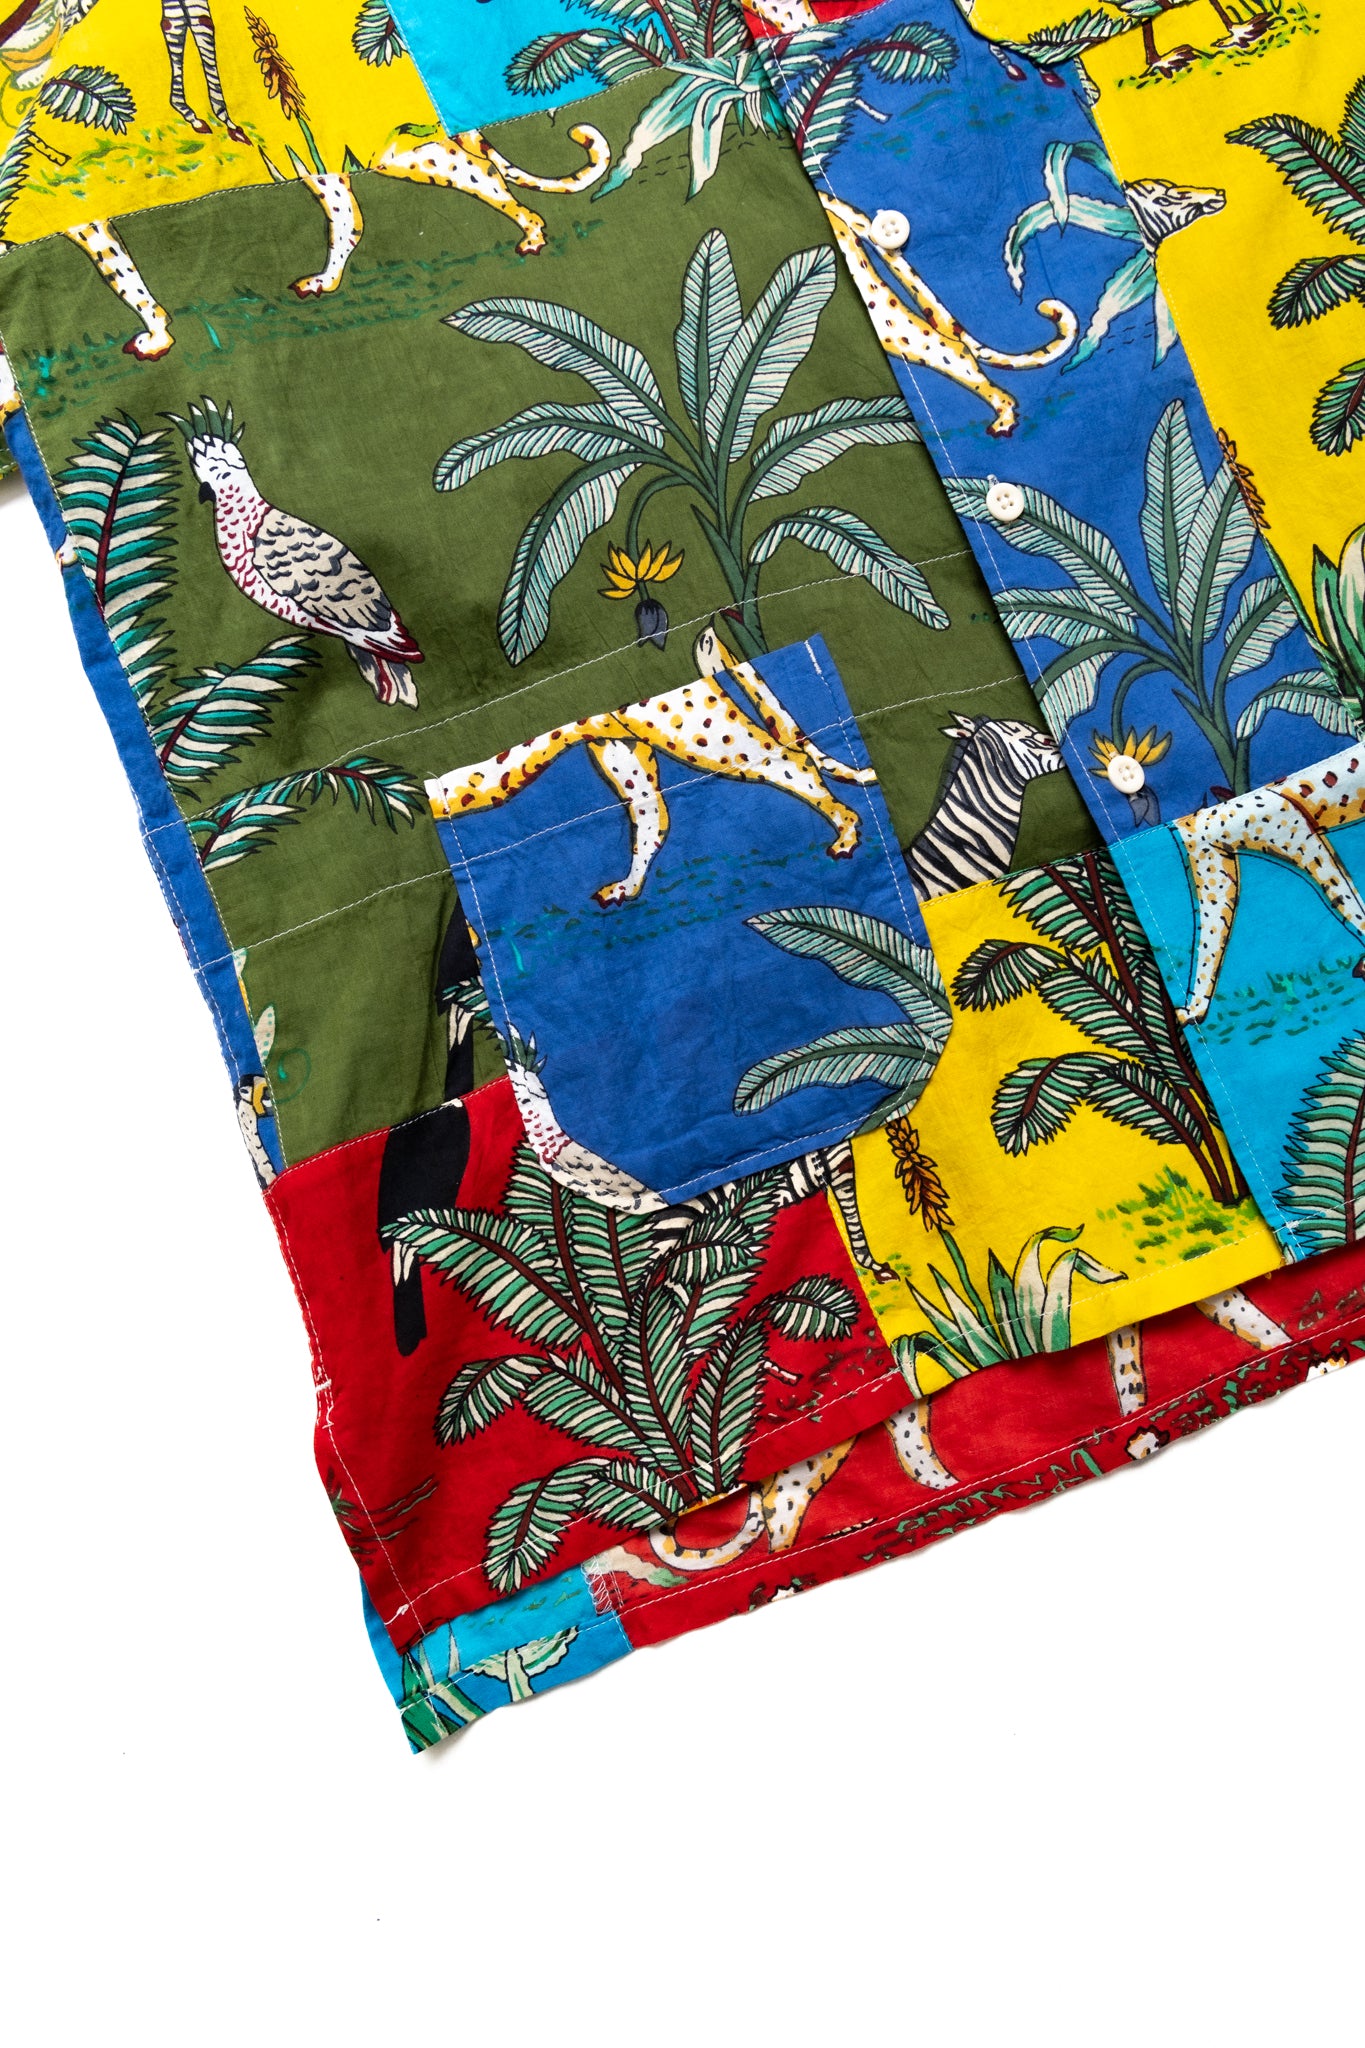 Camp Shirt Multi Color Animal Print Patchwork